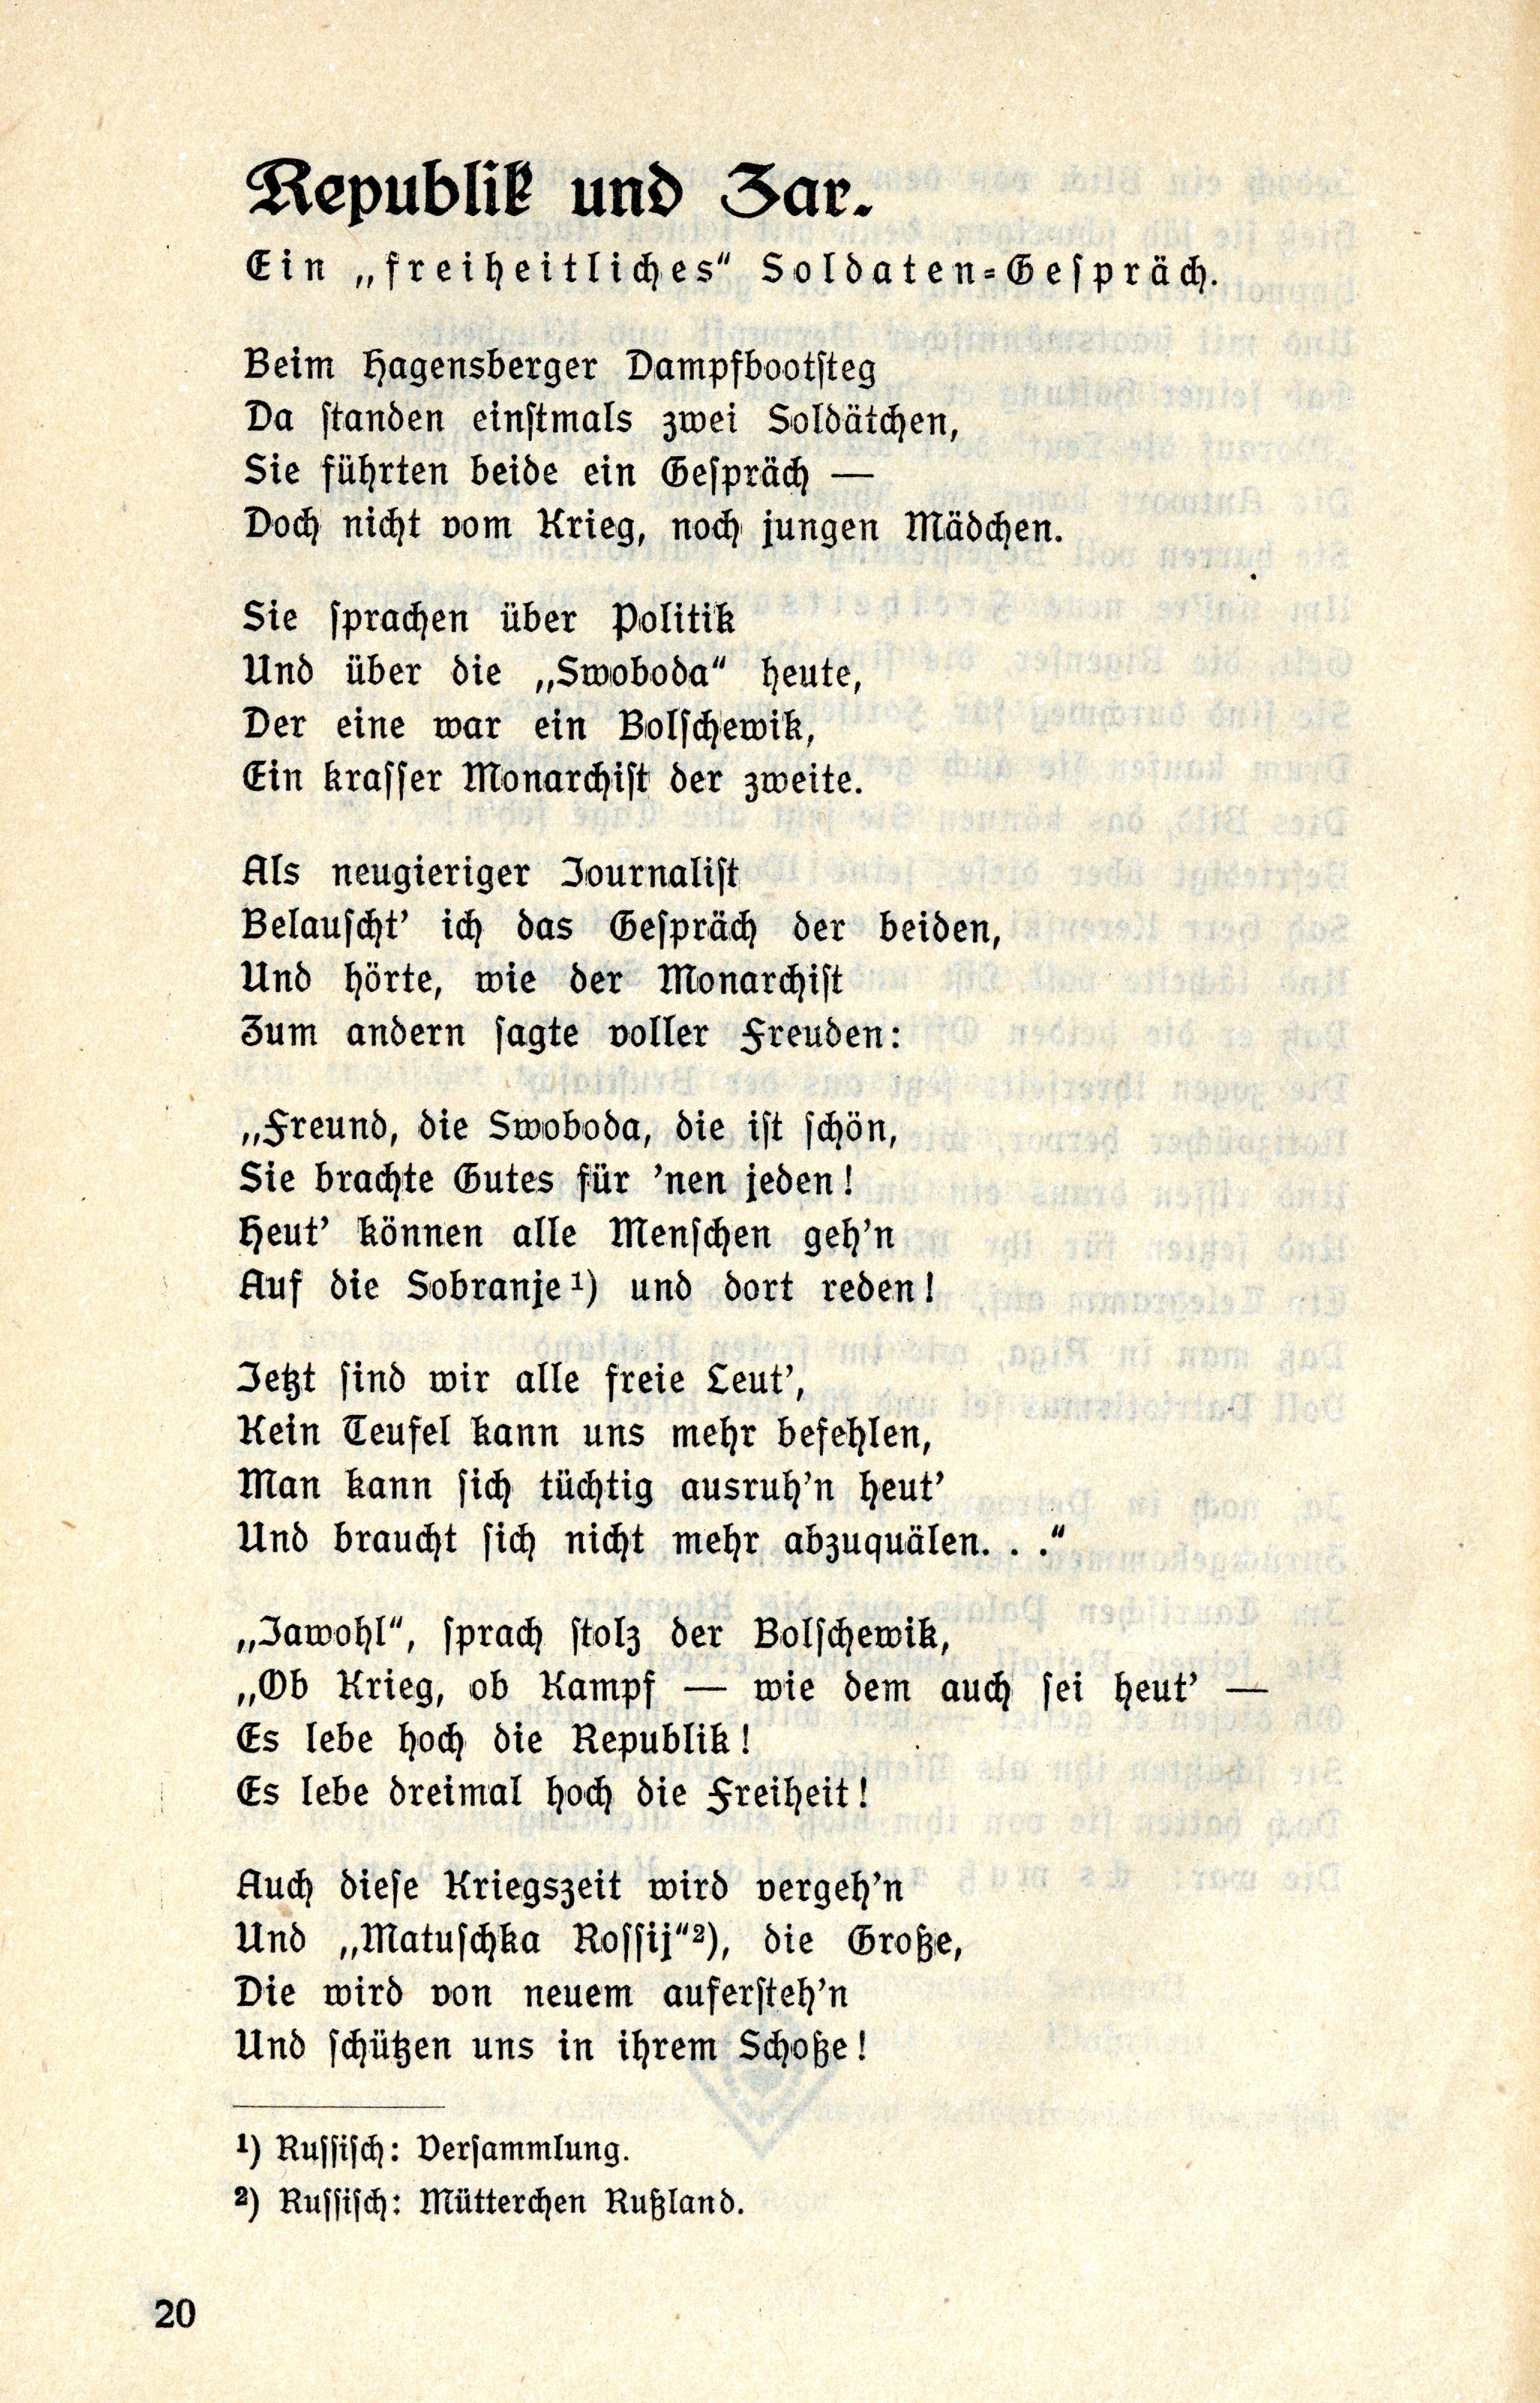 Der Balte im Maulkorb (1917) | 21. (20) Main body of text